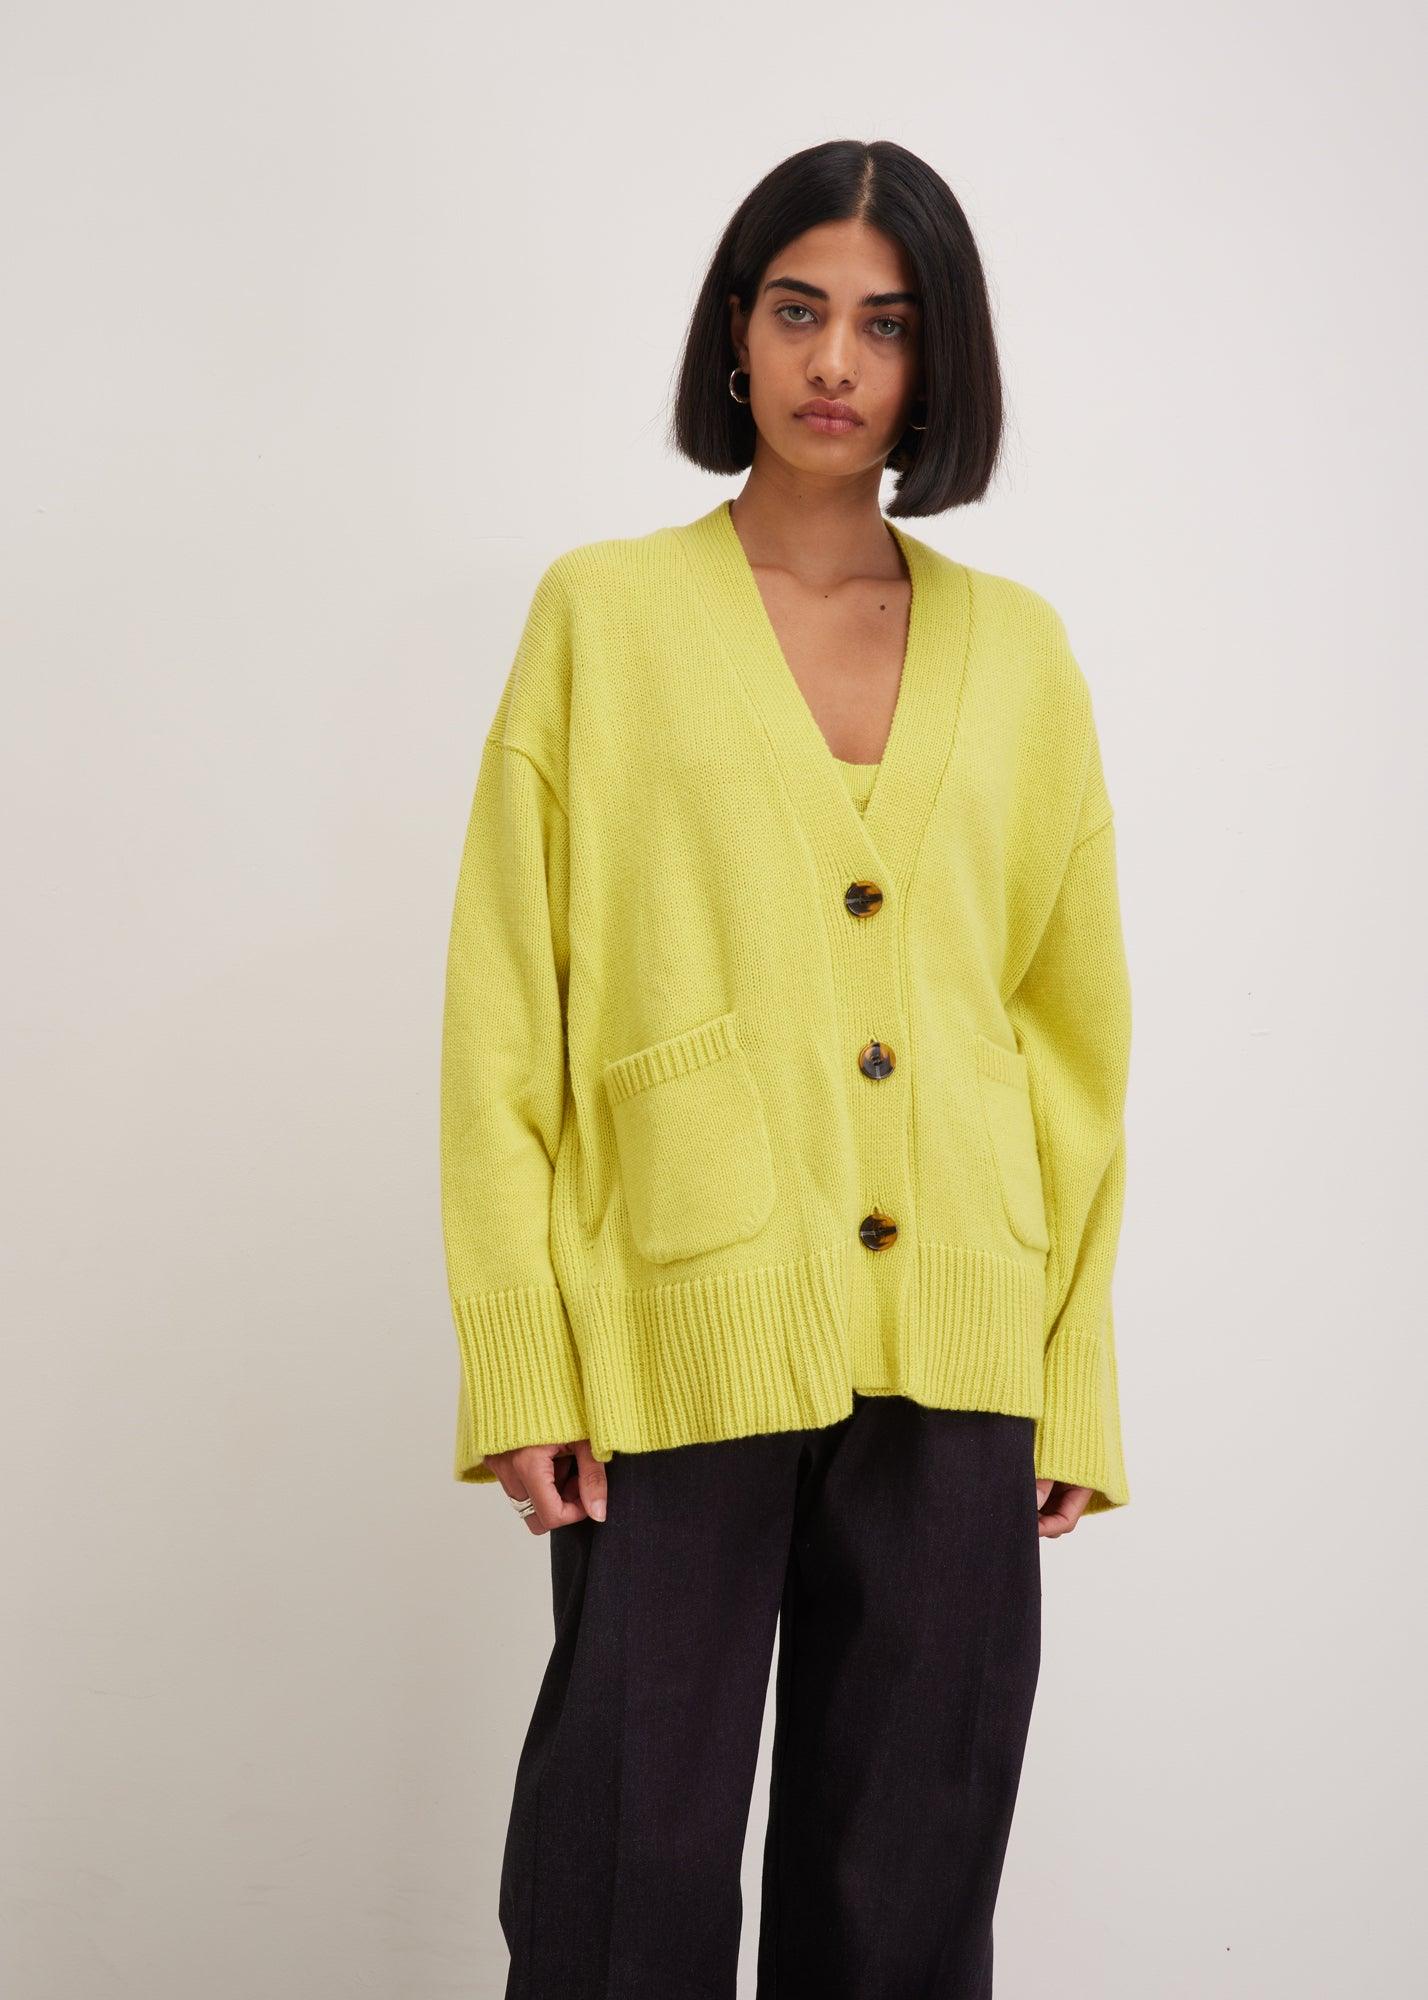 Lemon Cardigan | Luxurious Knitwear | Wool Cardigan | Ukrainian Fashion Brand UK